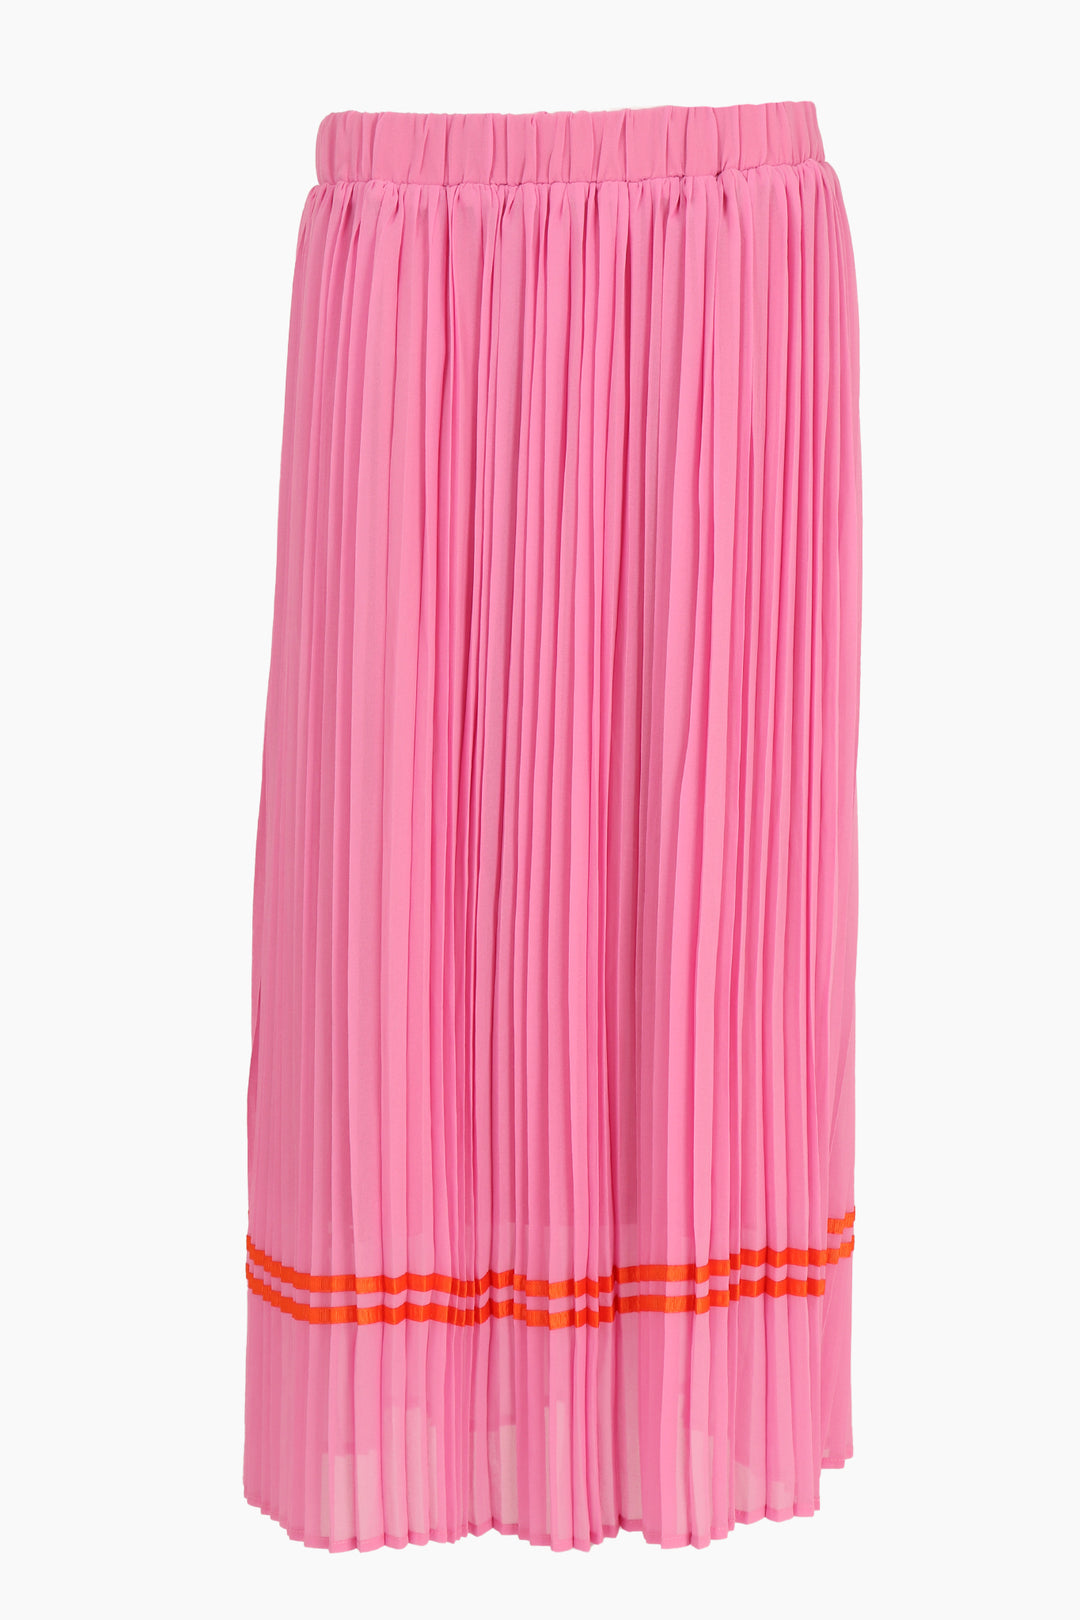 pink pleated midi skirt with elasticated waist and orange ribbon trim